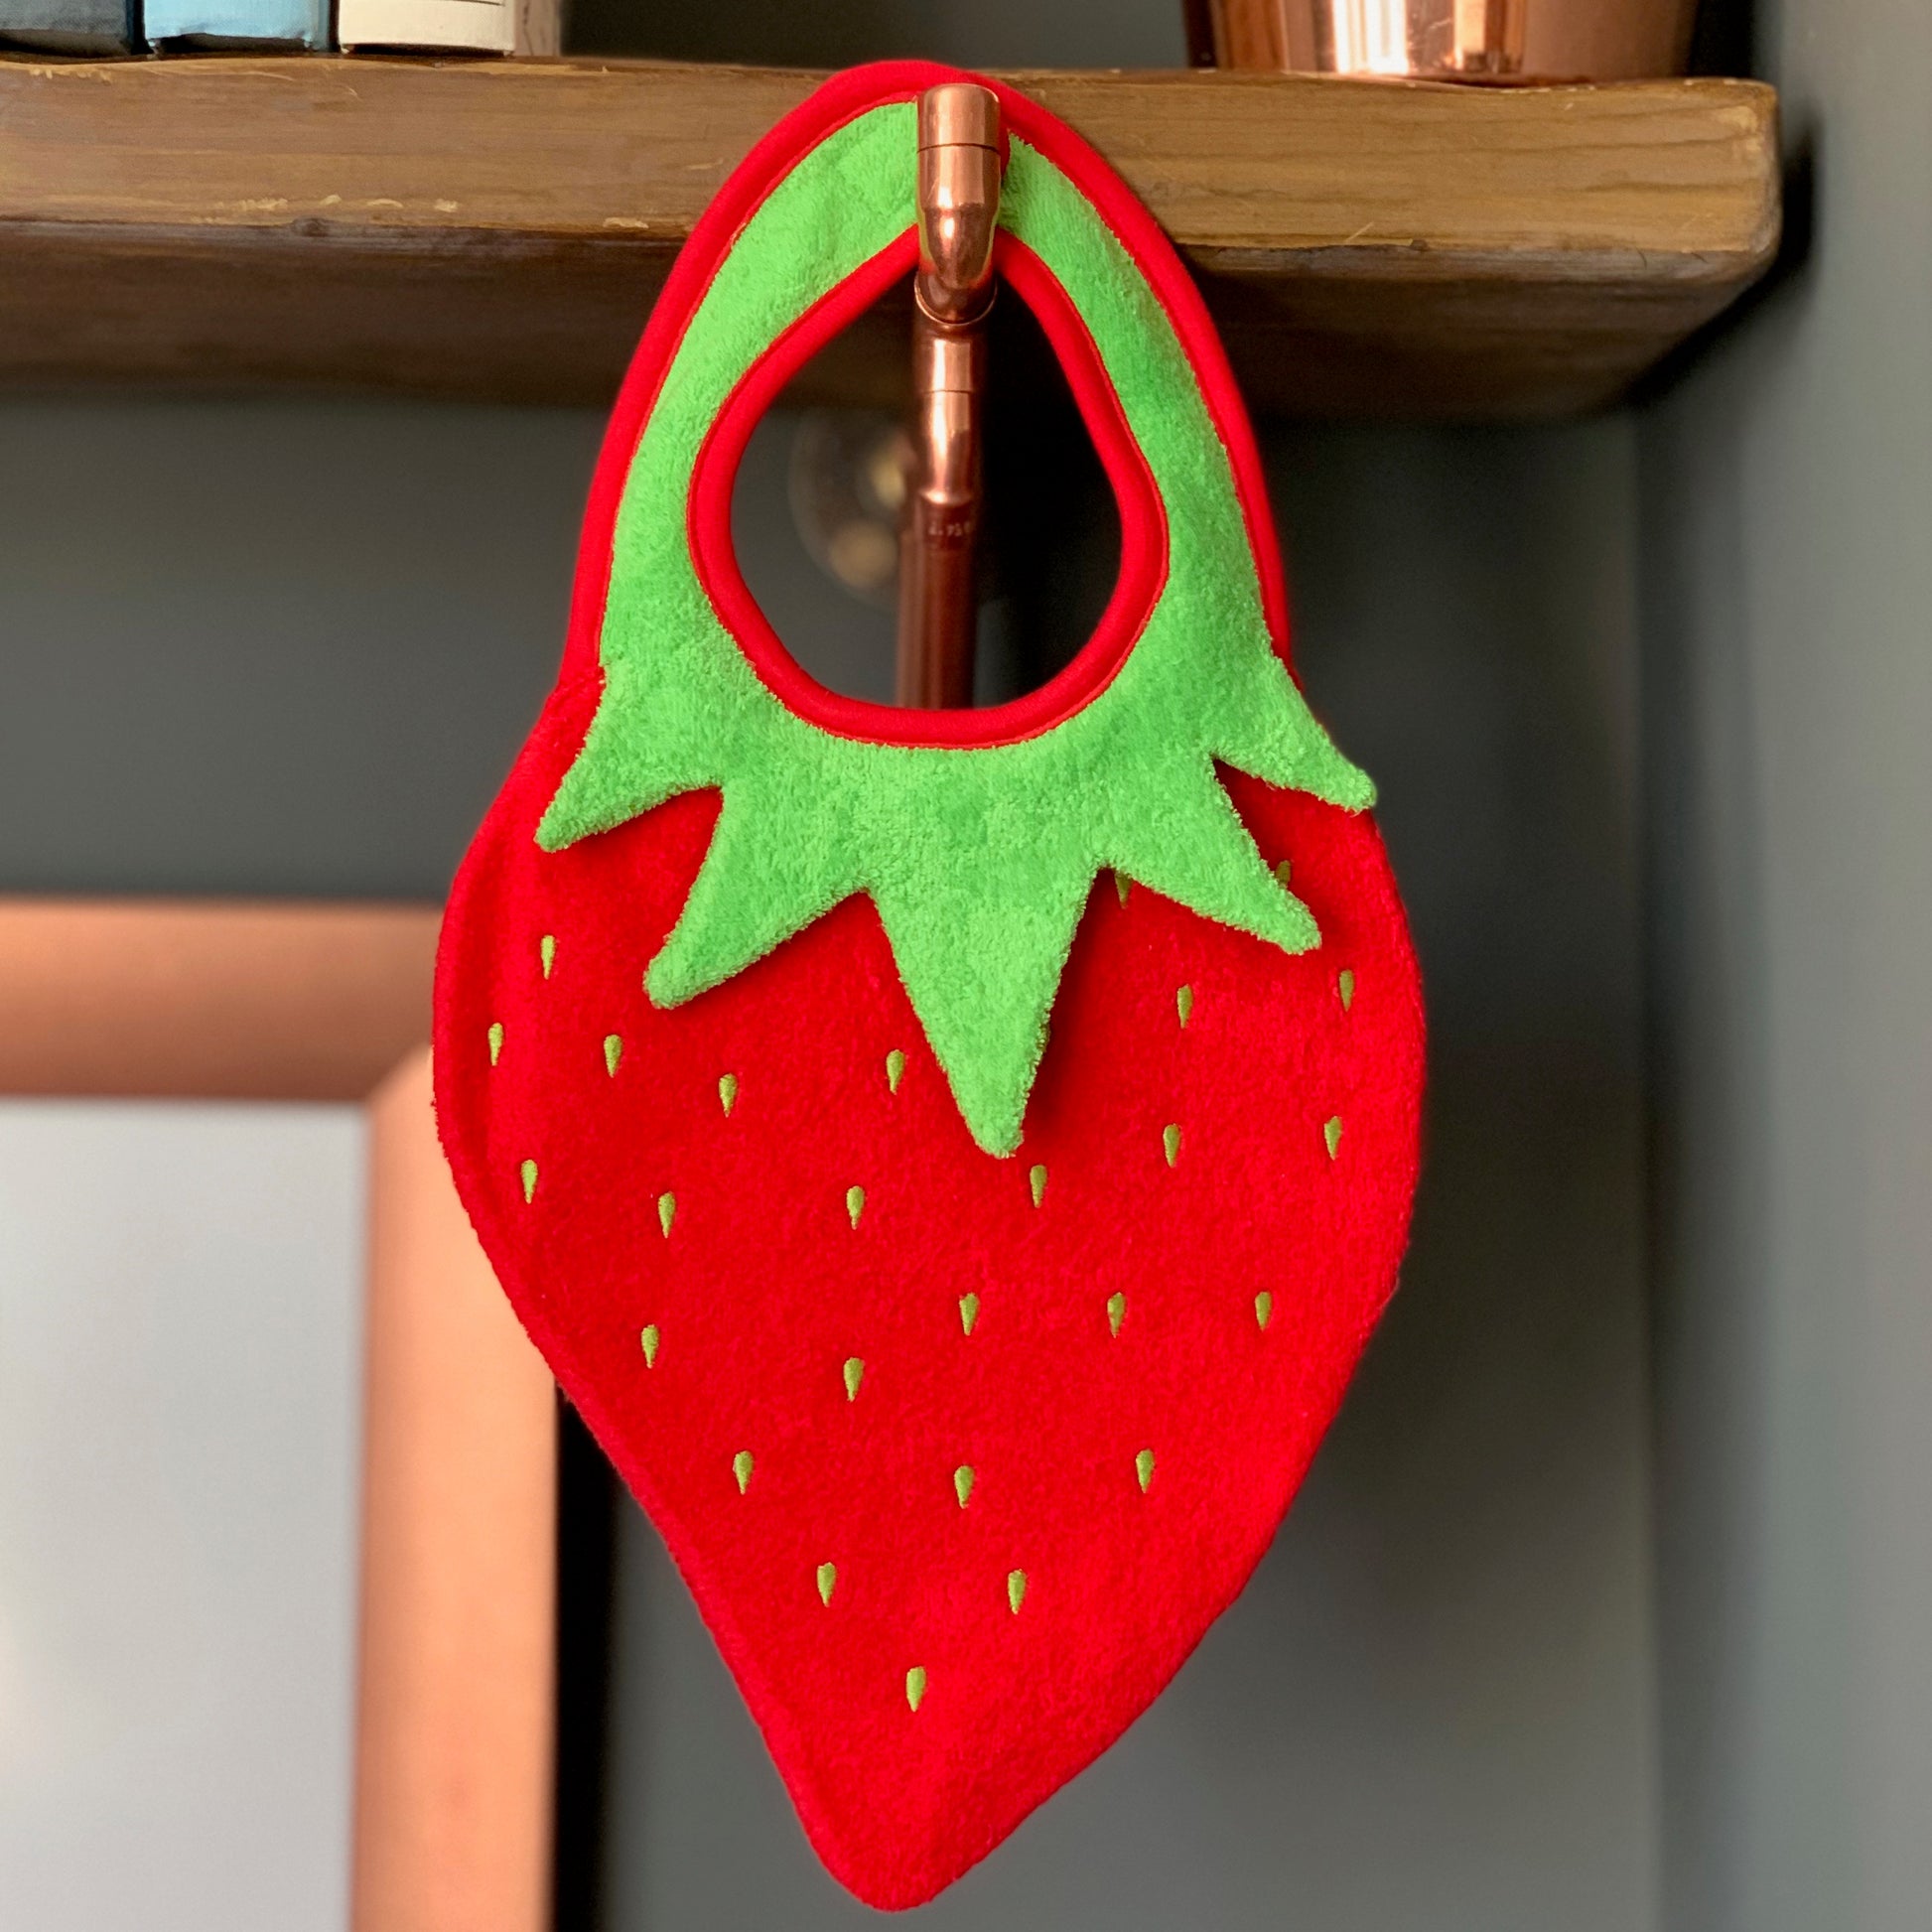 Red strawberry shape dribble bib